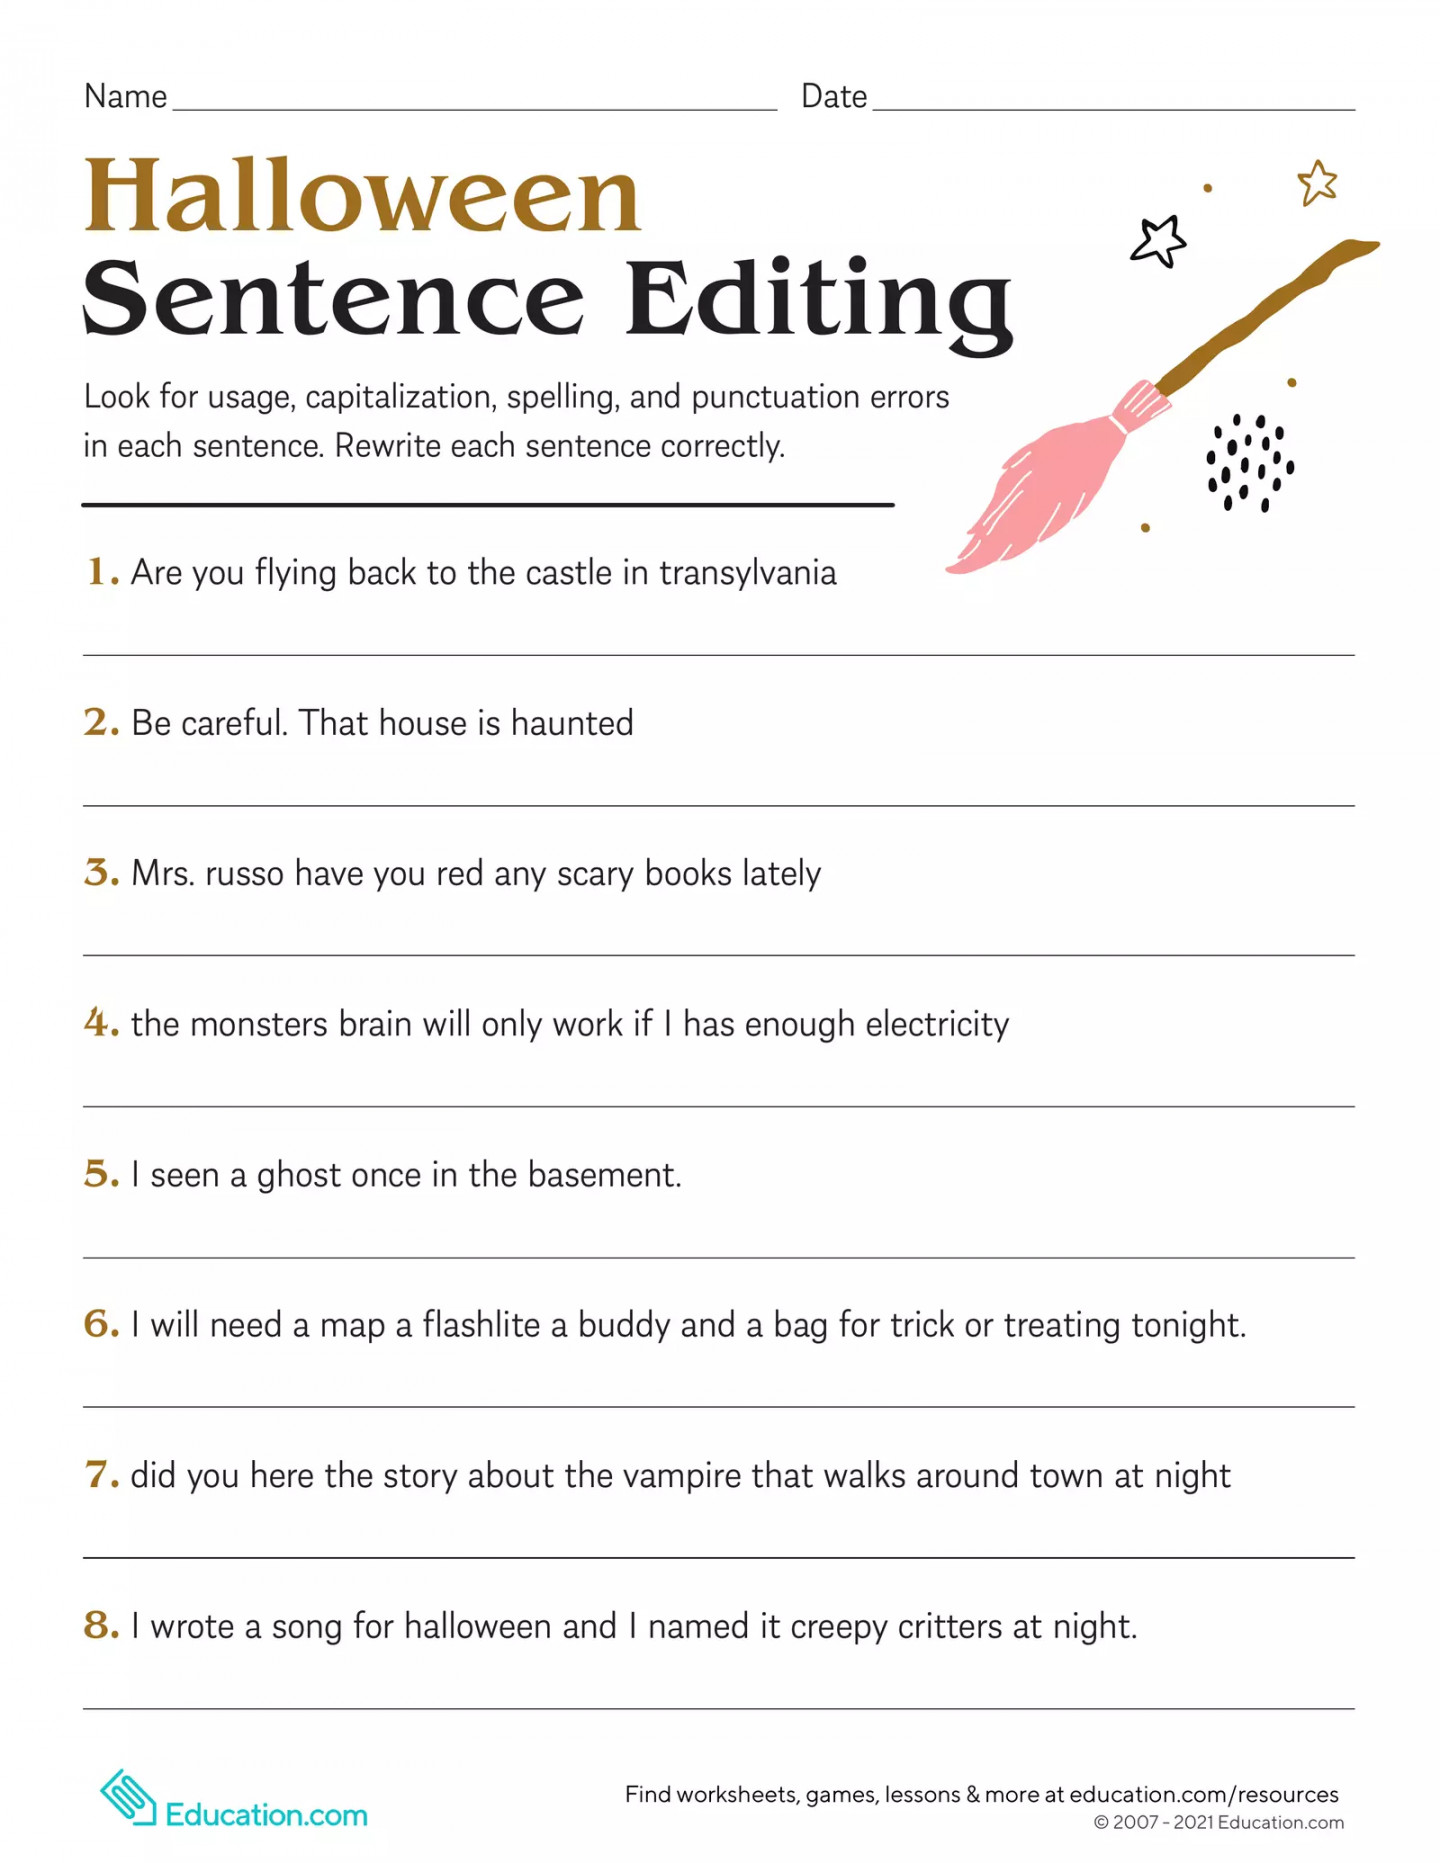 Halloween Sentence editing Interactive Worksheet – Edform